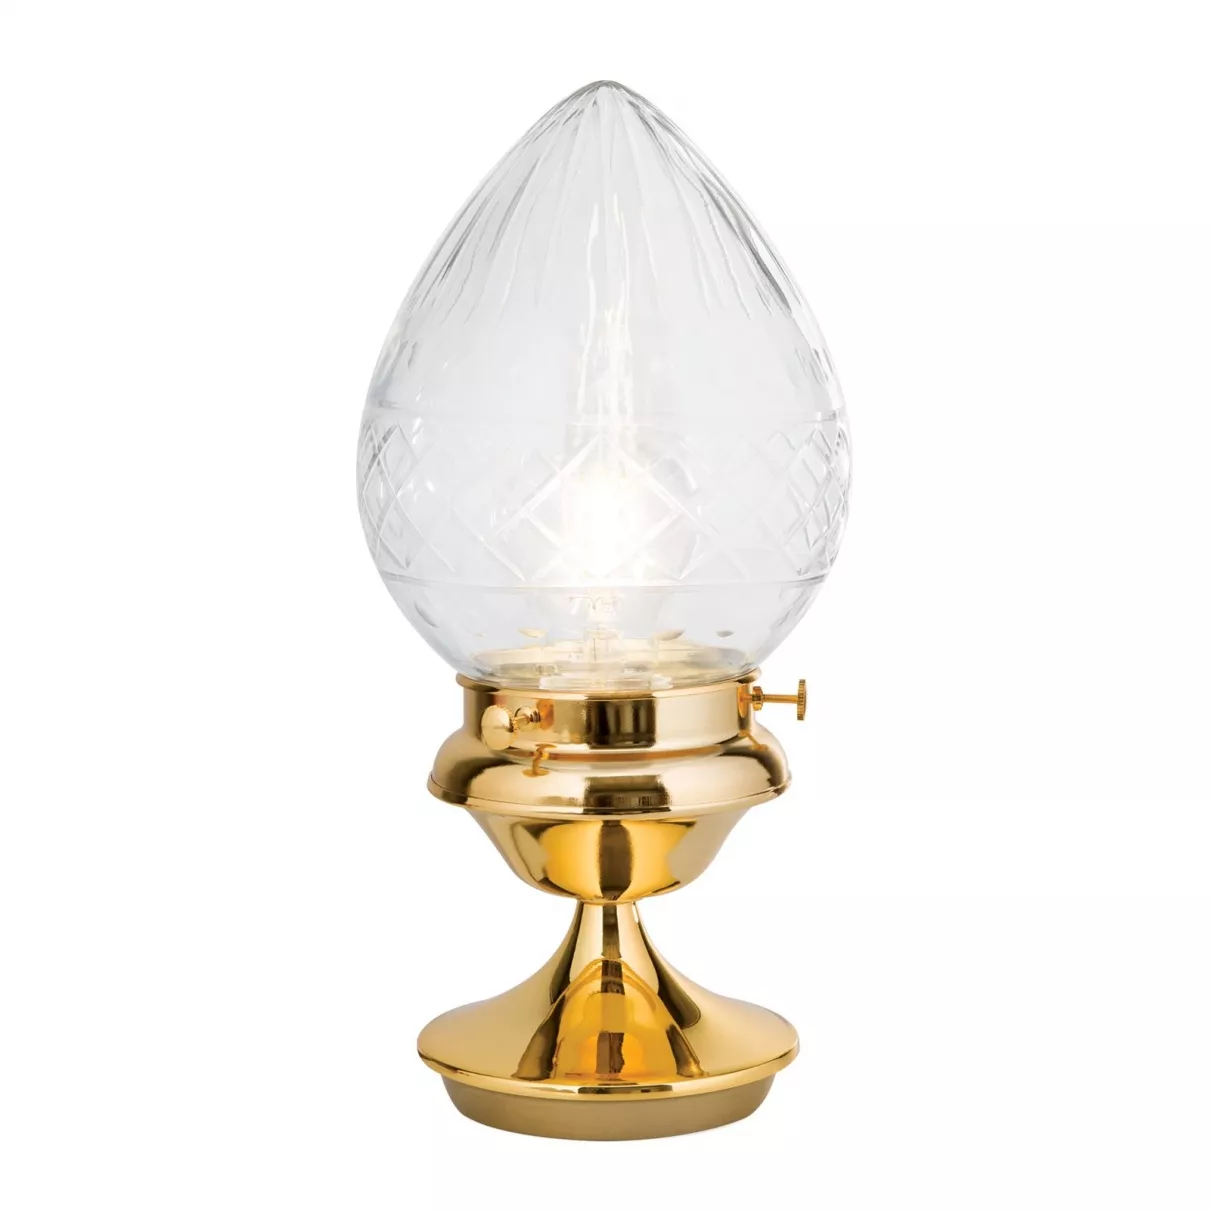 Budapest - 1 izzós arany asztali lámpa, E27 - ORI-LA 4-732 gold/411 klar-Schliff